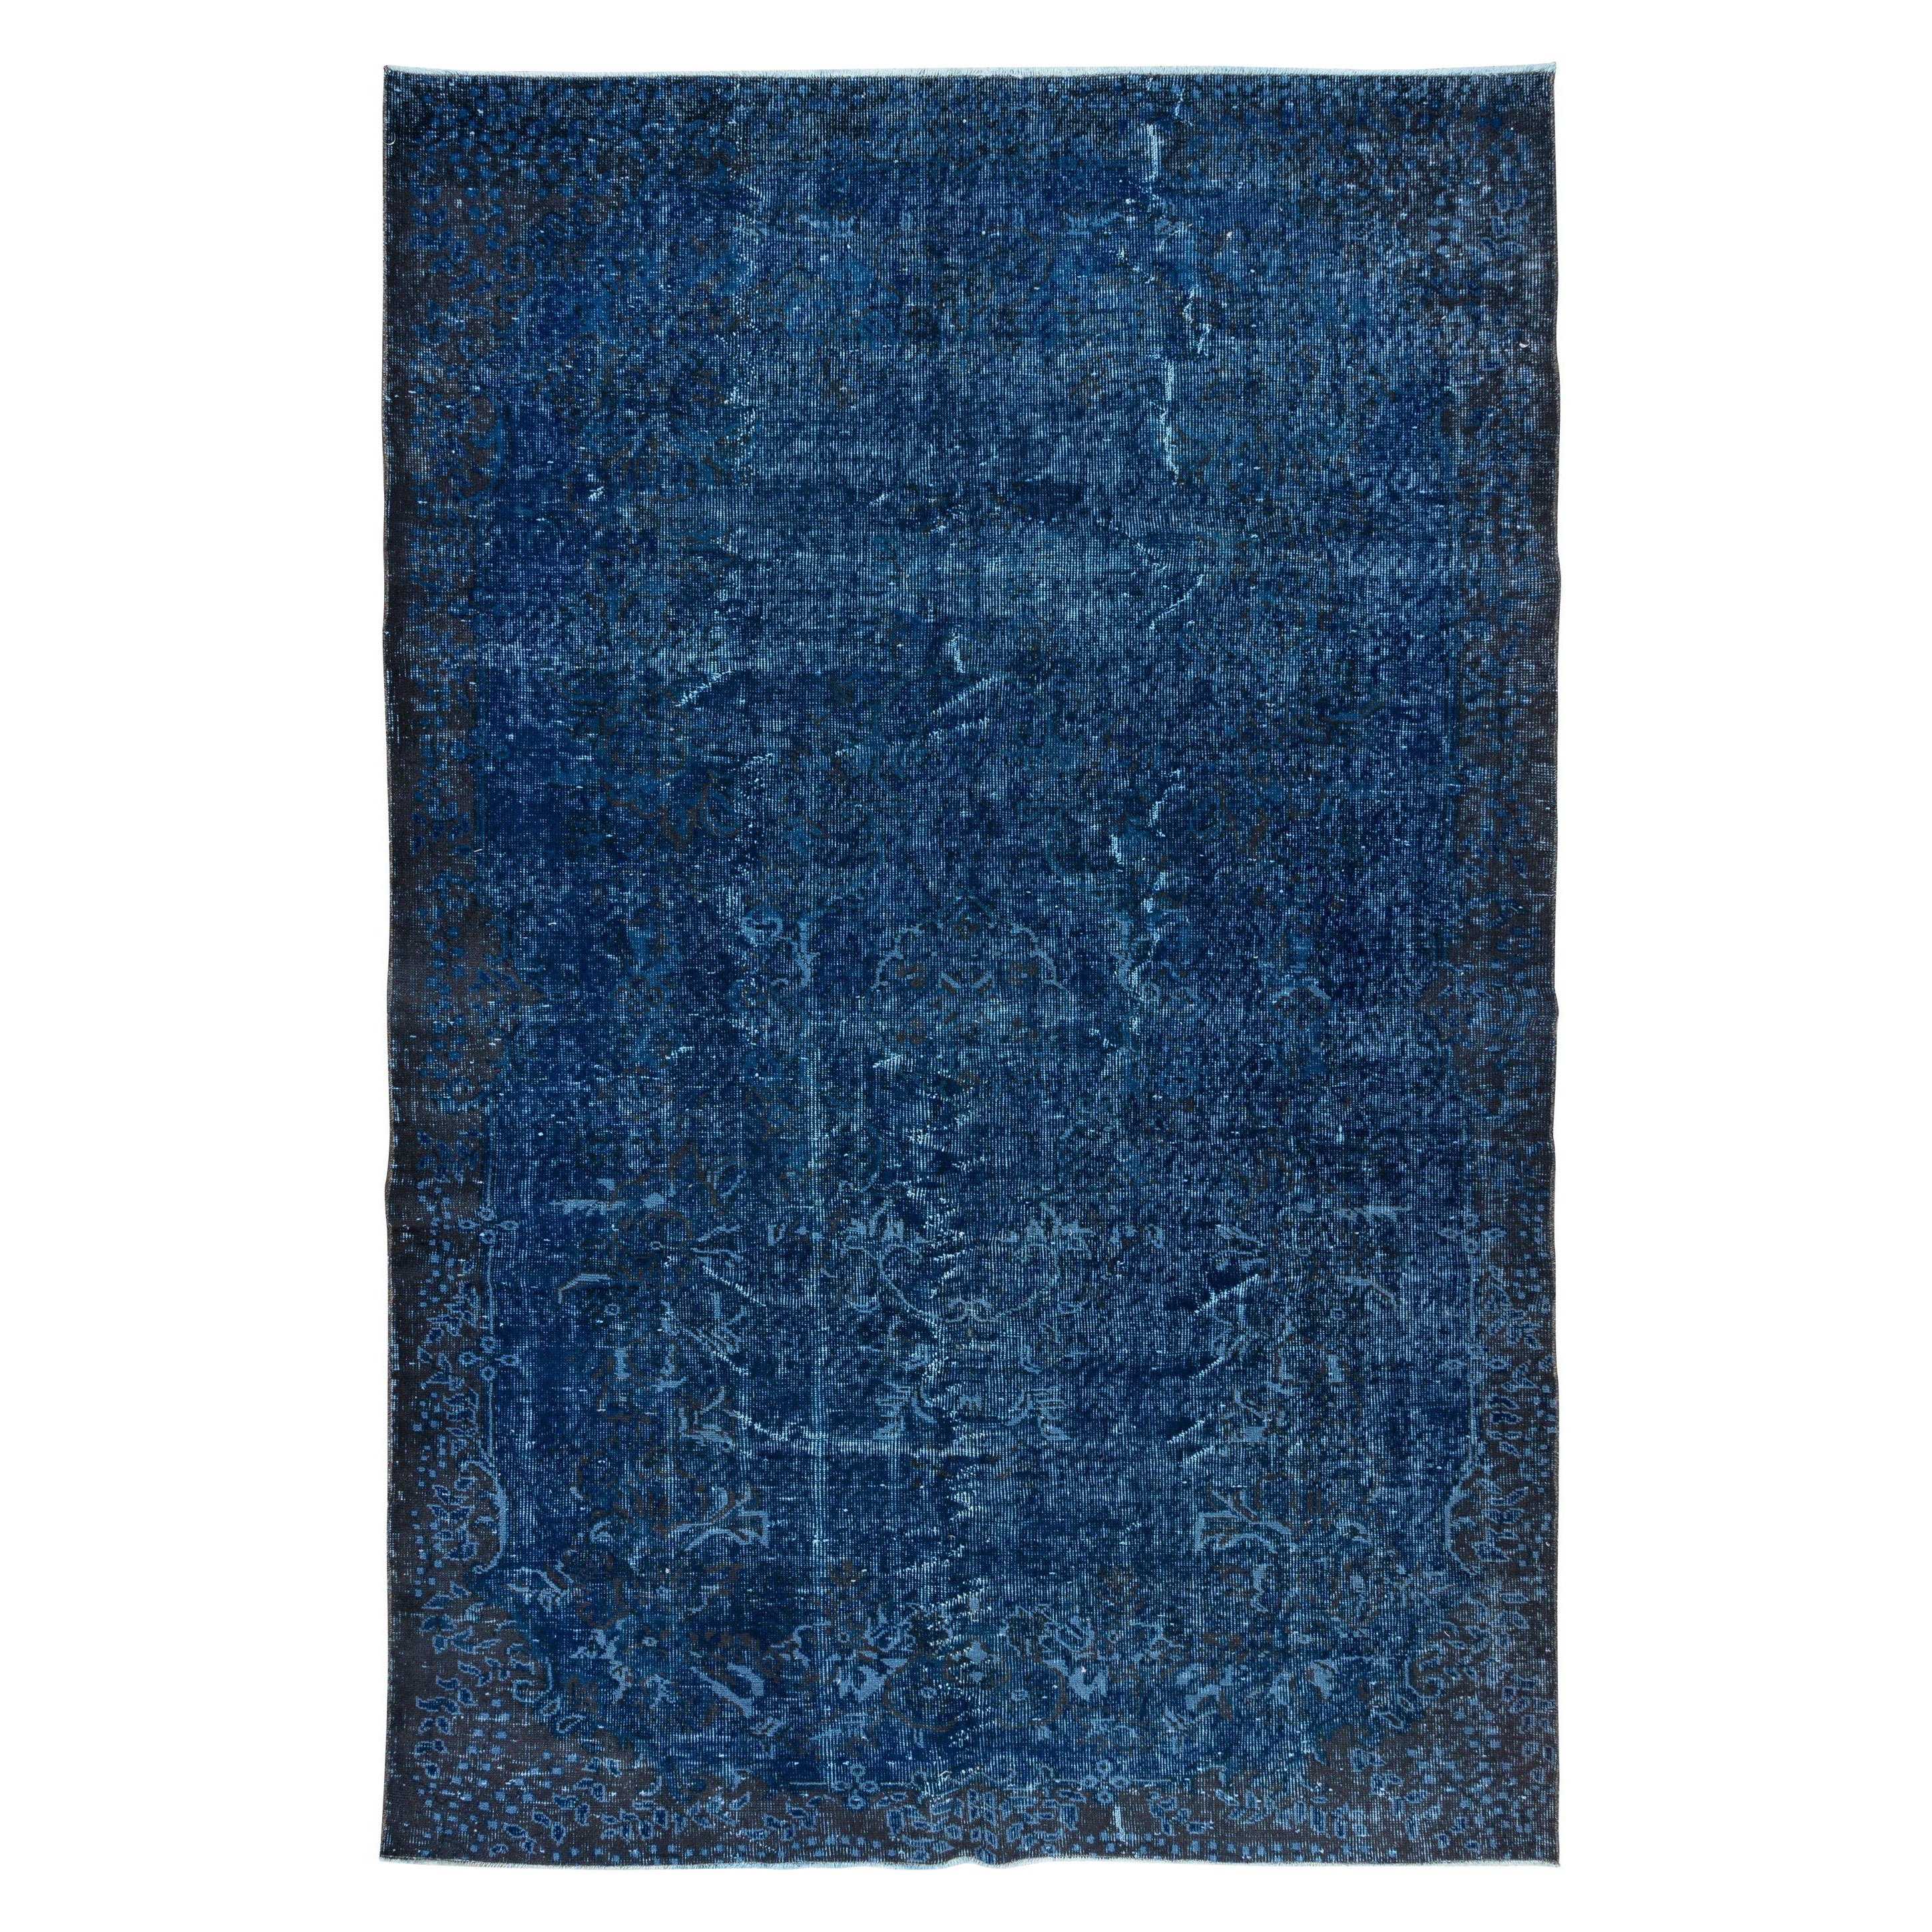 6x9 Ft Modern Turkish Area Rug in Indigo Blue, Decorative Handmade Wool Carpet For Sale